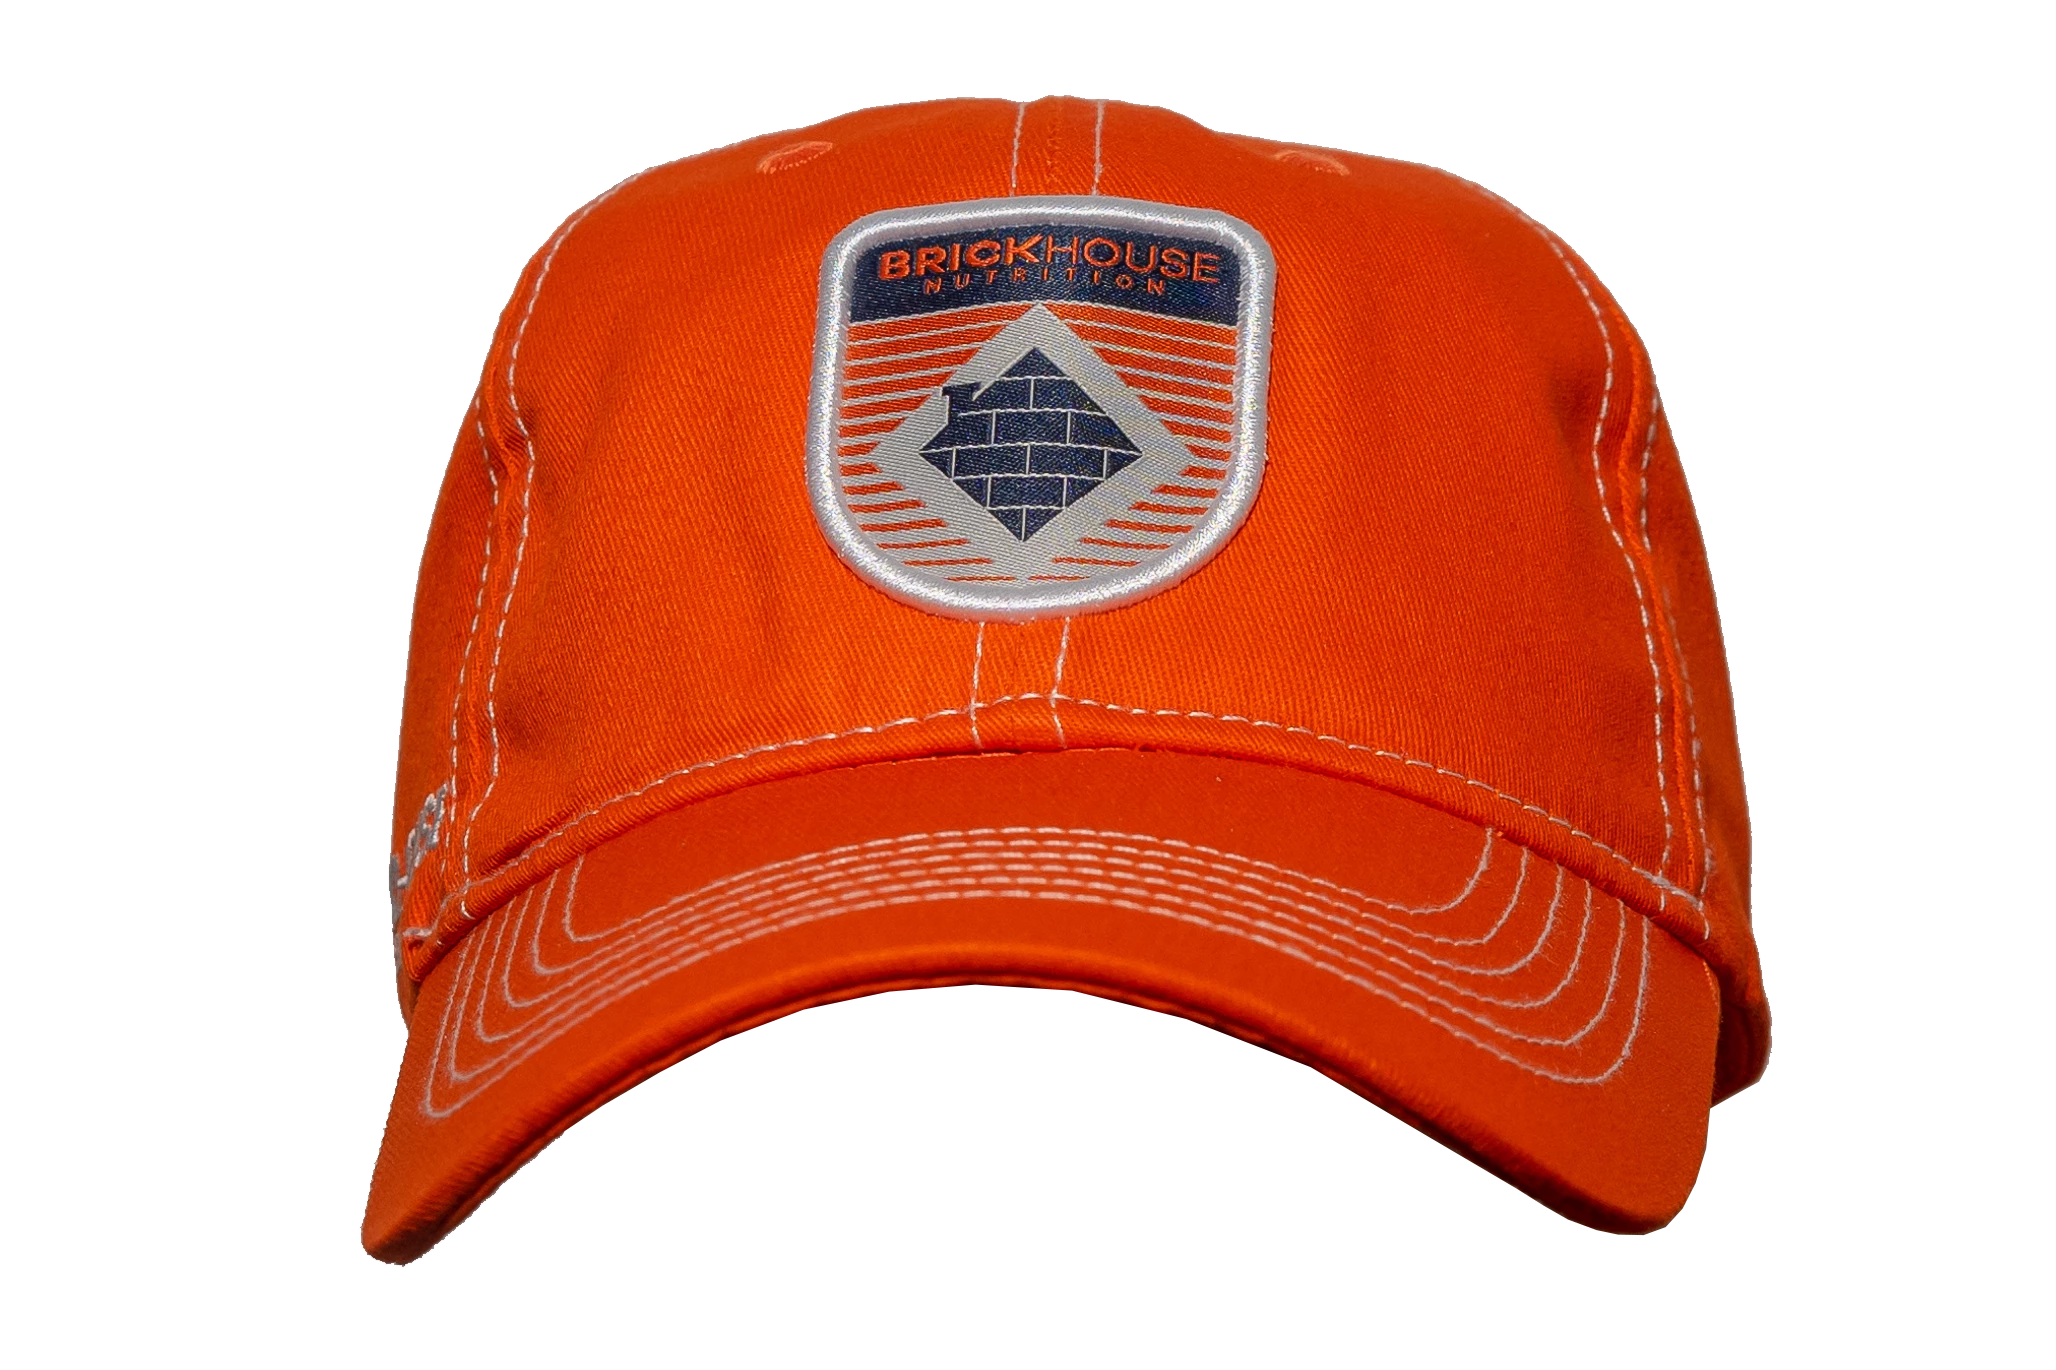 Brickhouse nutrition snapback hat patch orange front